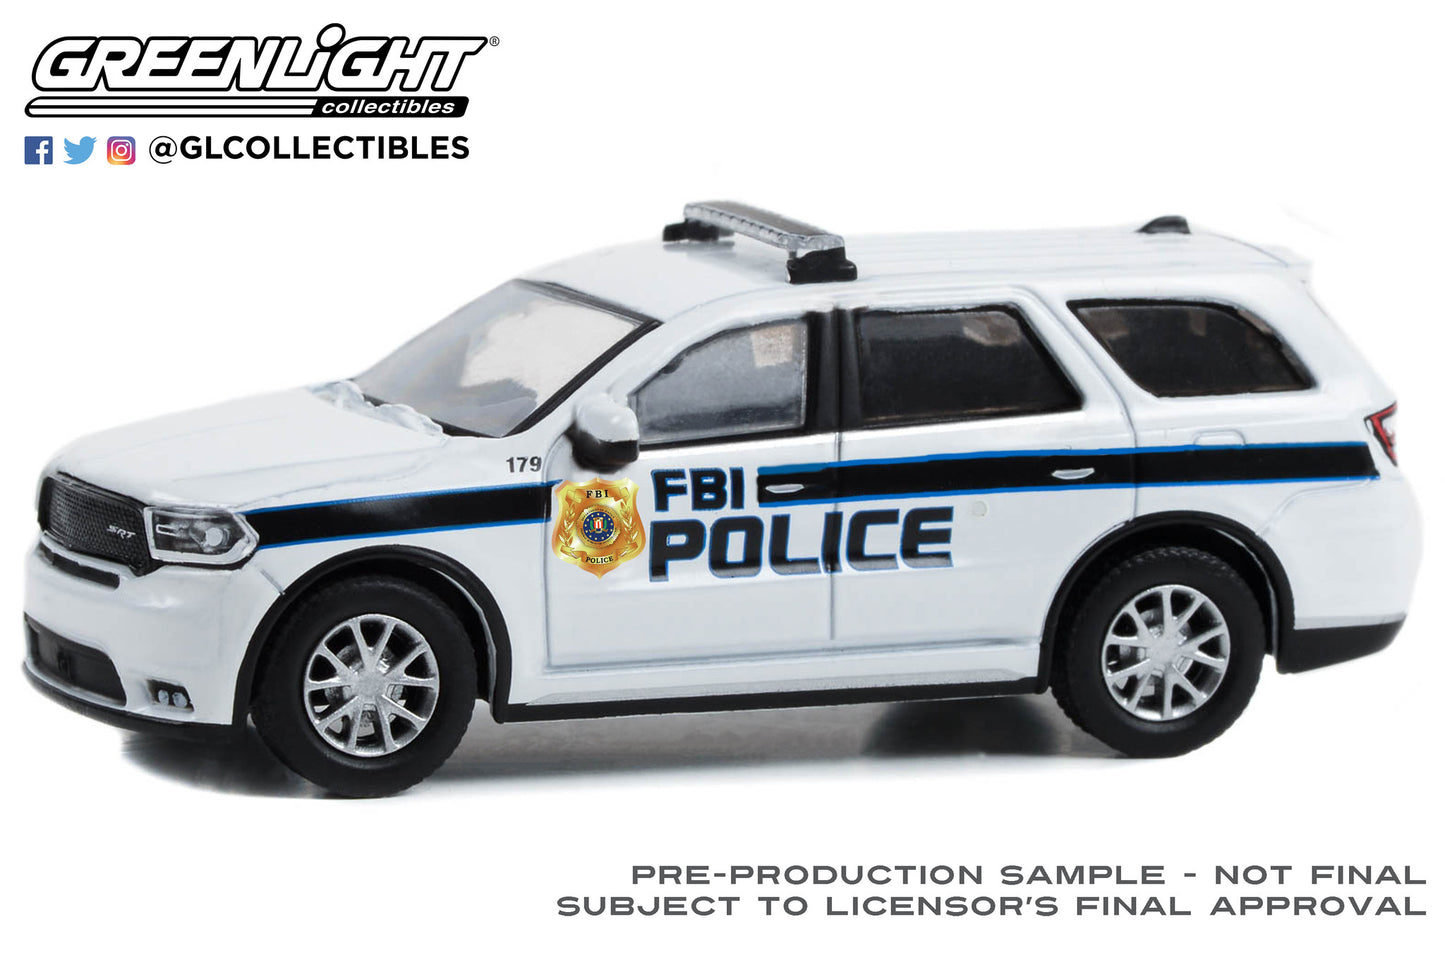 GreenLight 1:64 Hot Pursuit Special Edition - FBI Police (Federal Bureau of Investigation Police) - 2018 Dodge Durango Police Pursuit 43025-E